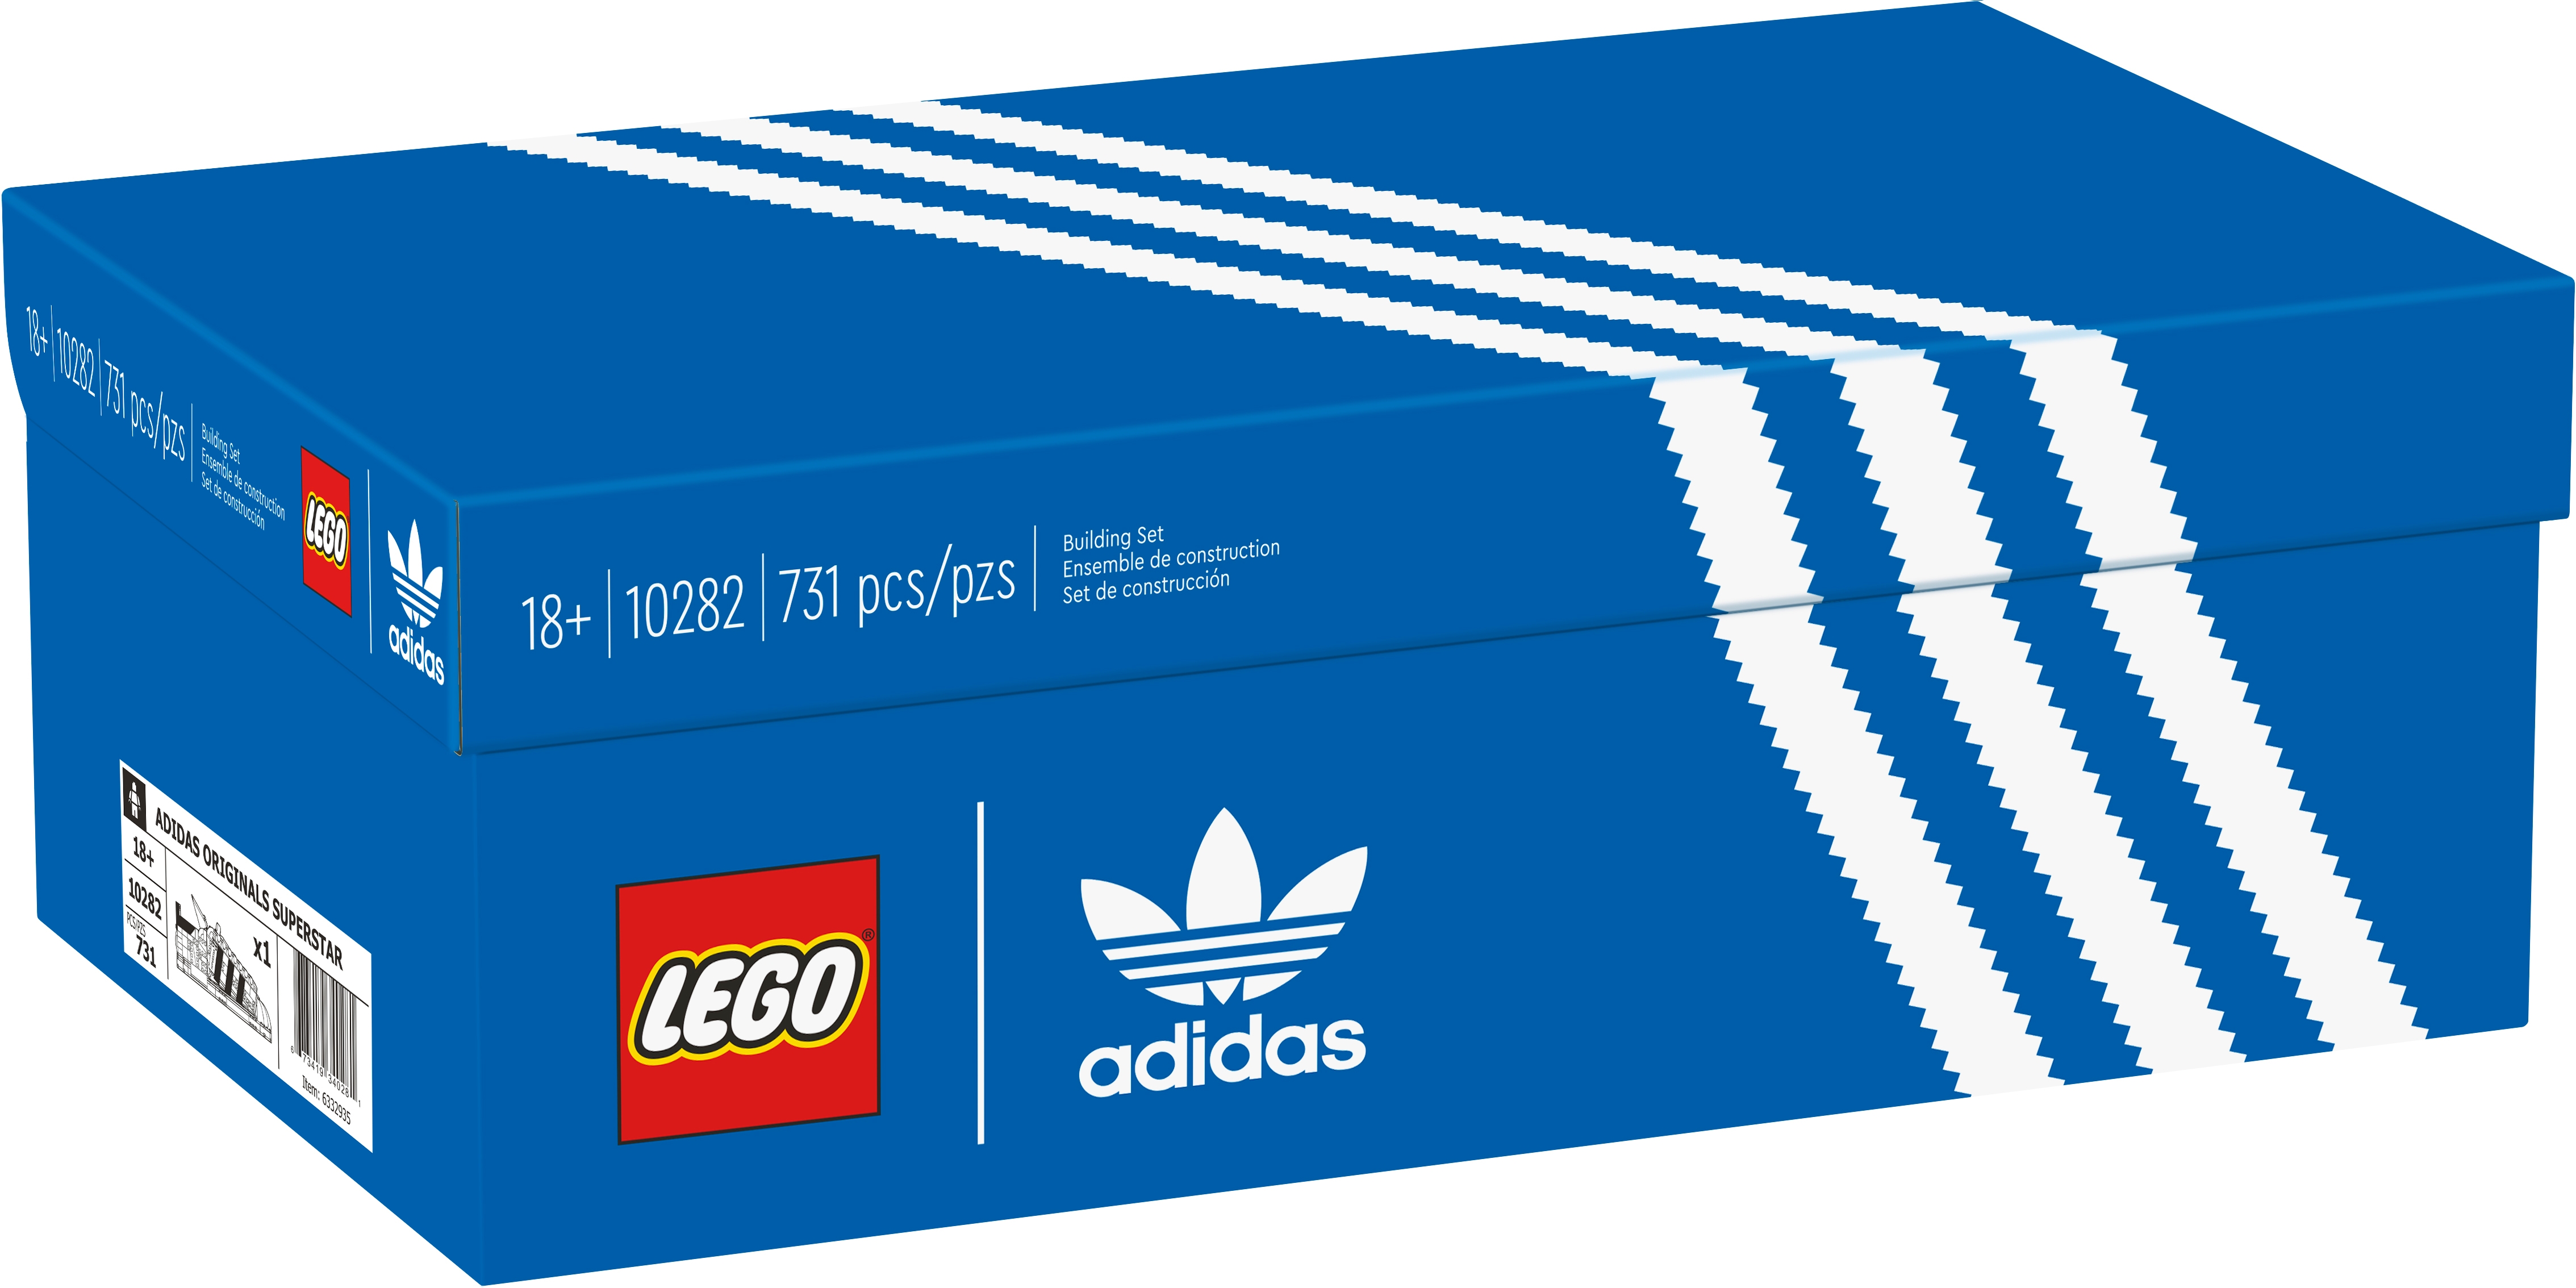 adidas Originals Superstar 10282 | Other | Buy online at the Official LEGO®  Shop US غرفة العاب